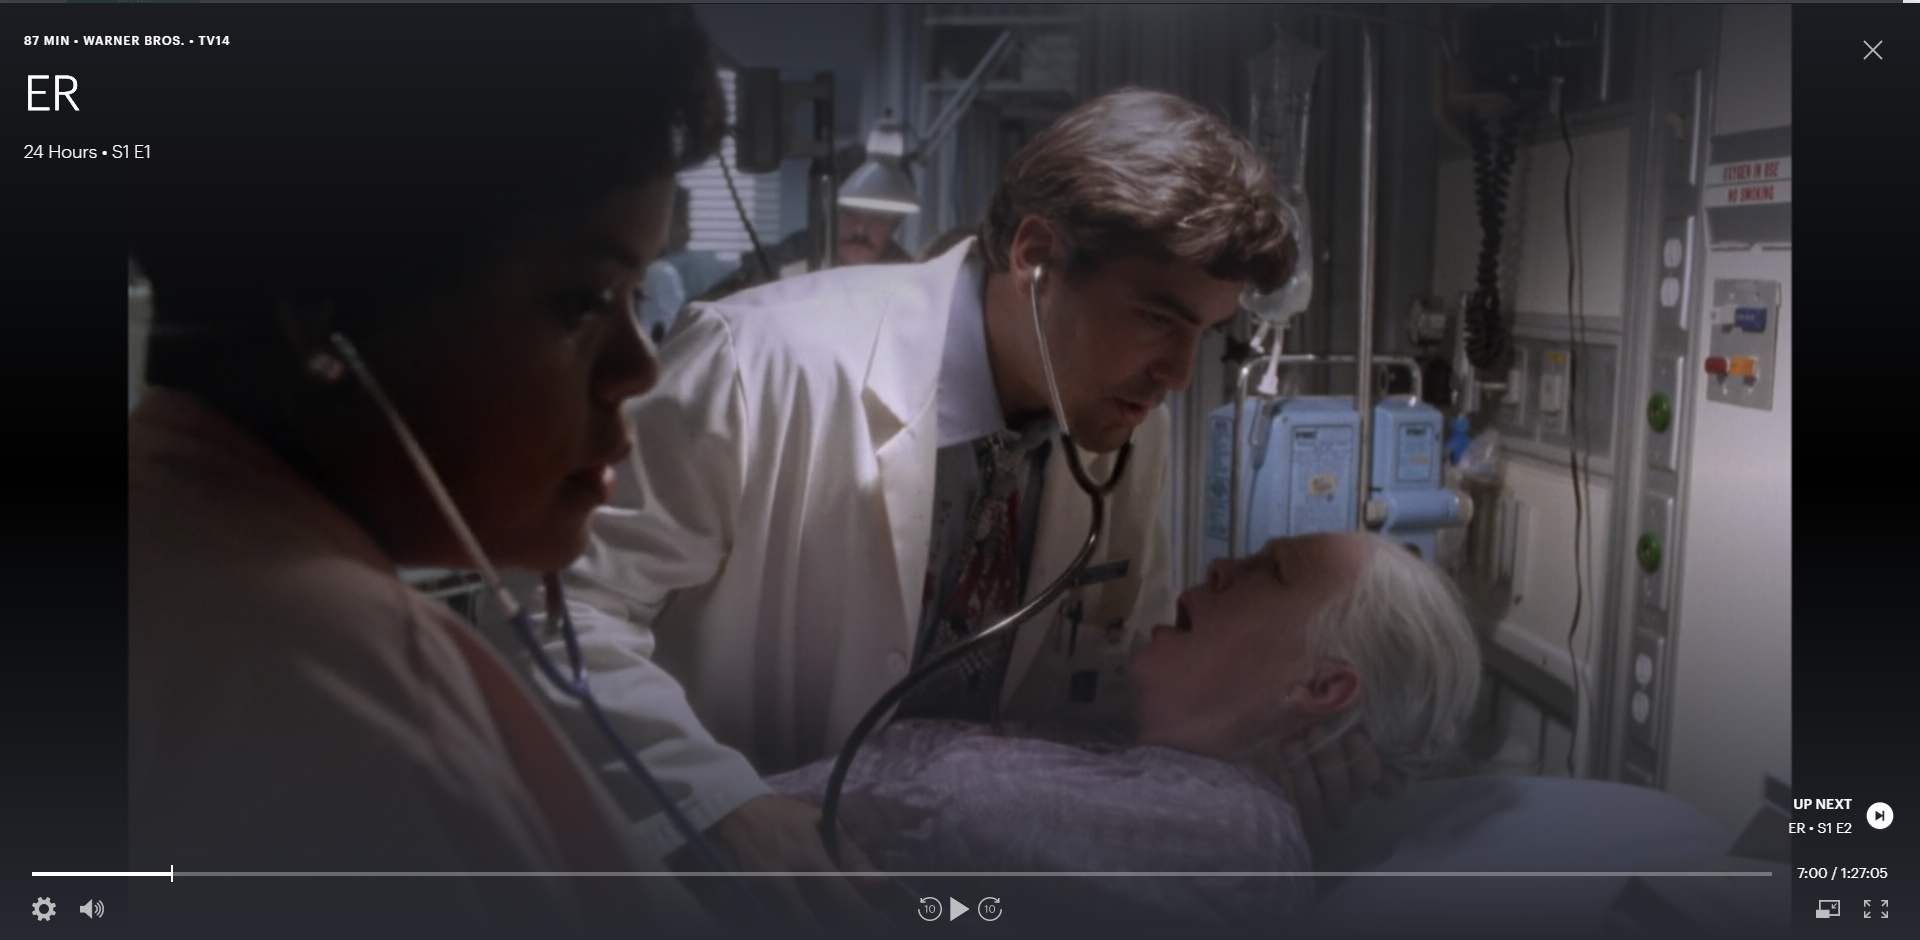 Screenshot of ER playing on Hulu interface